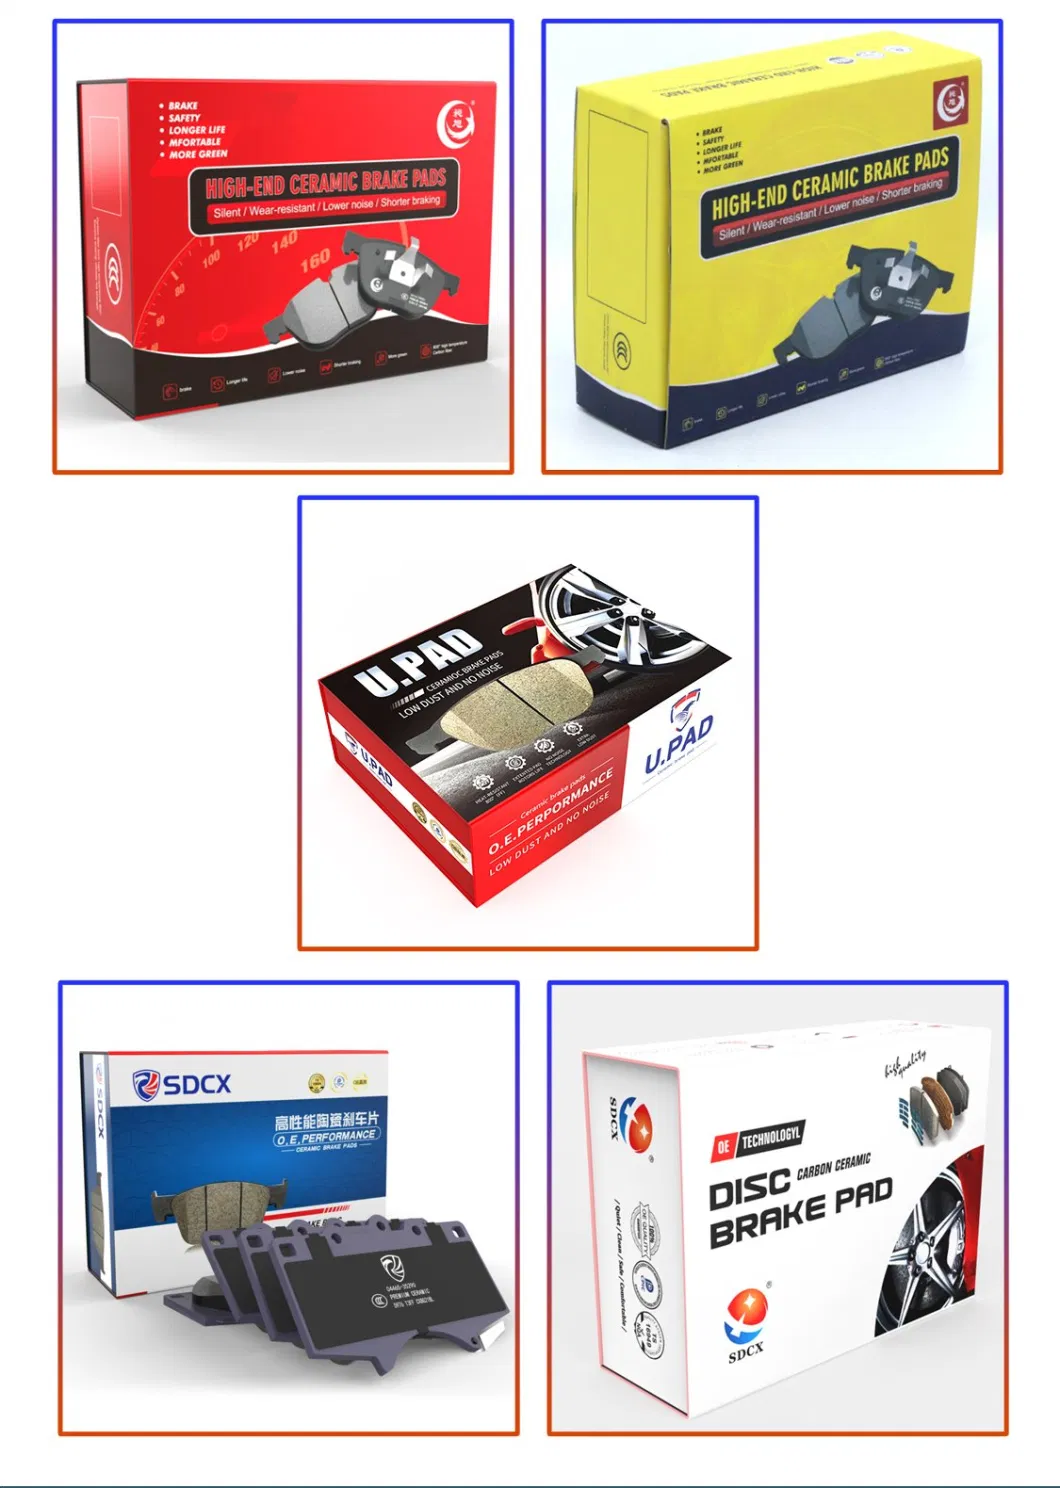 Sdcx Brake Pad D1400-8508/68049158AA Ceramic Material for Dodge RAM 3500/RAM 2500/Chrysler